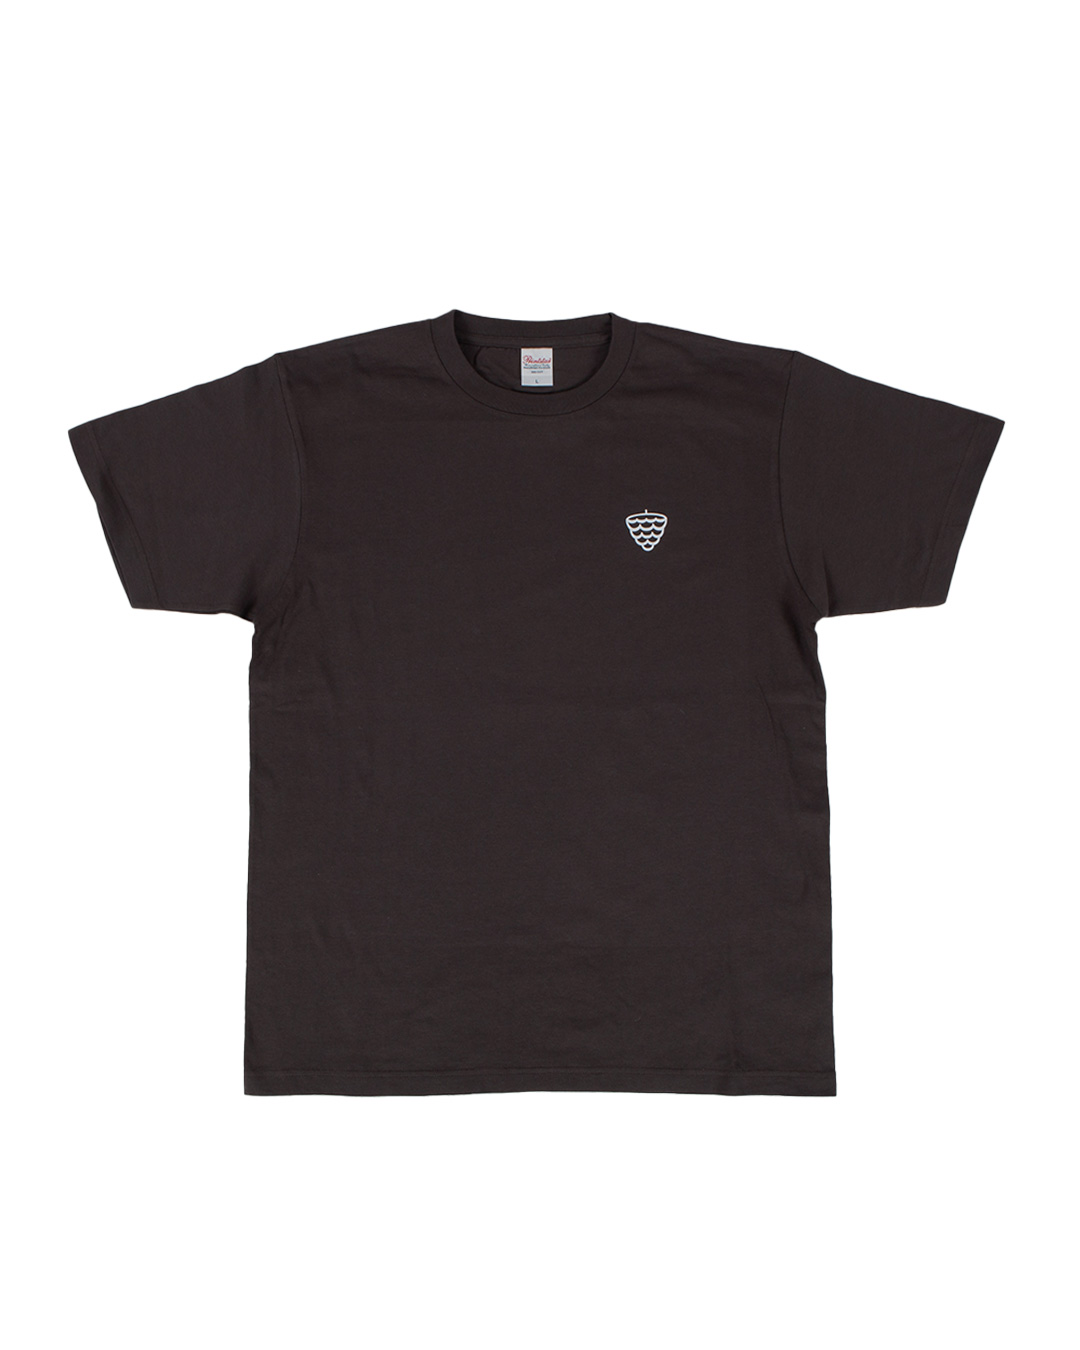 Pineconelab T-Shirts Charcoal